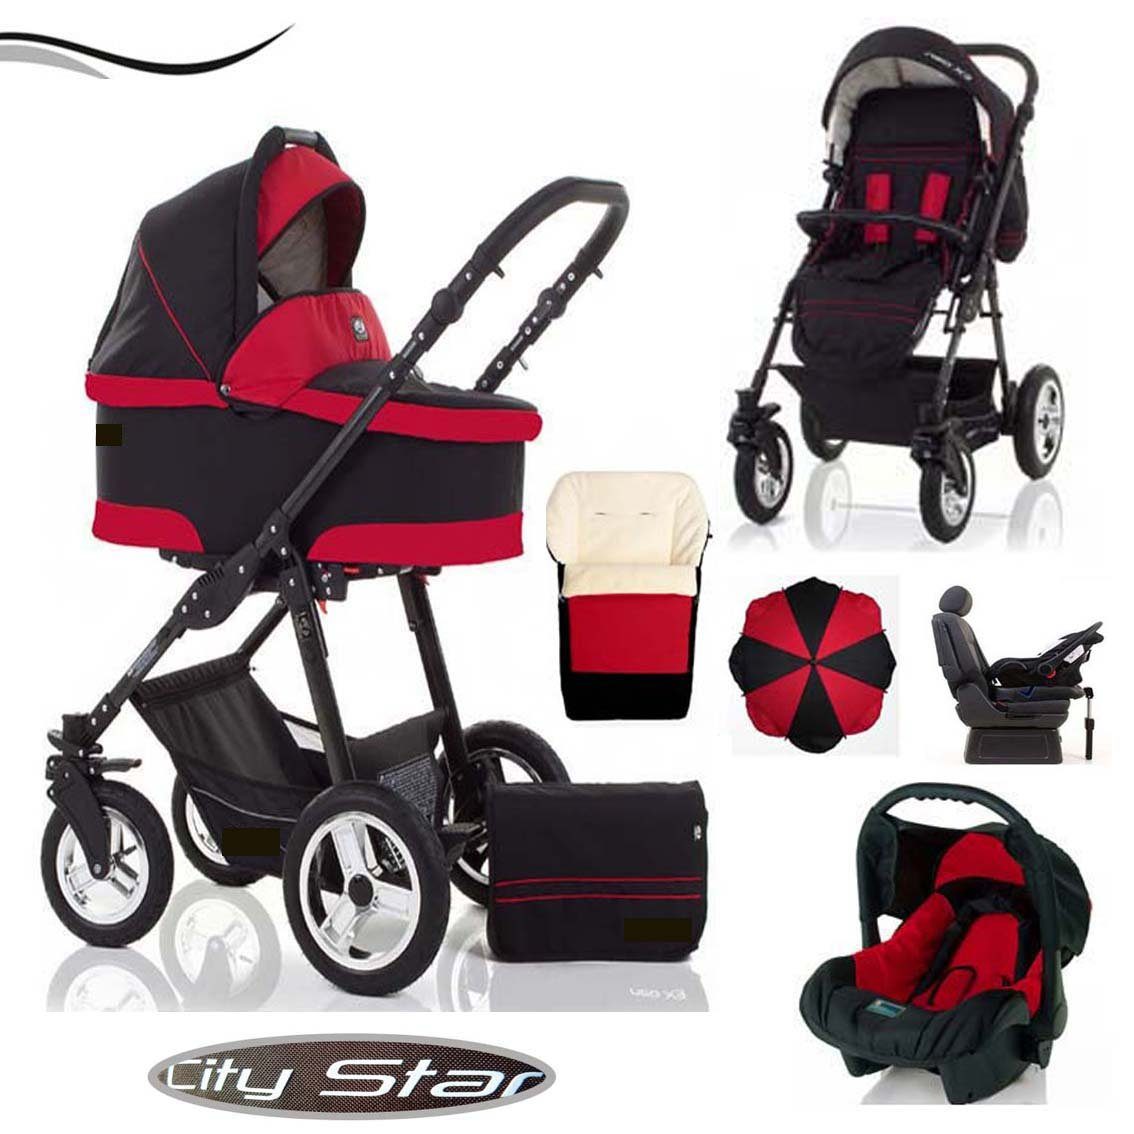 babies-on-wheels Kombi-Kinderwagen City Star 6 in 1 inkl. Autositz und Iso Base - 19 Teile